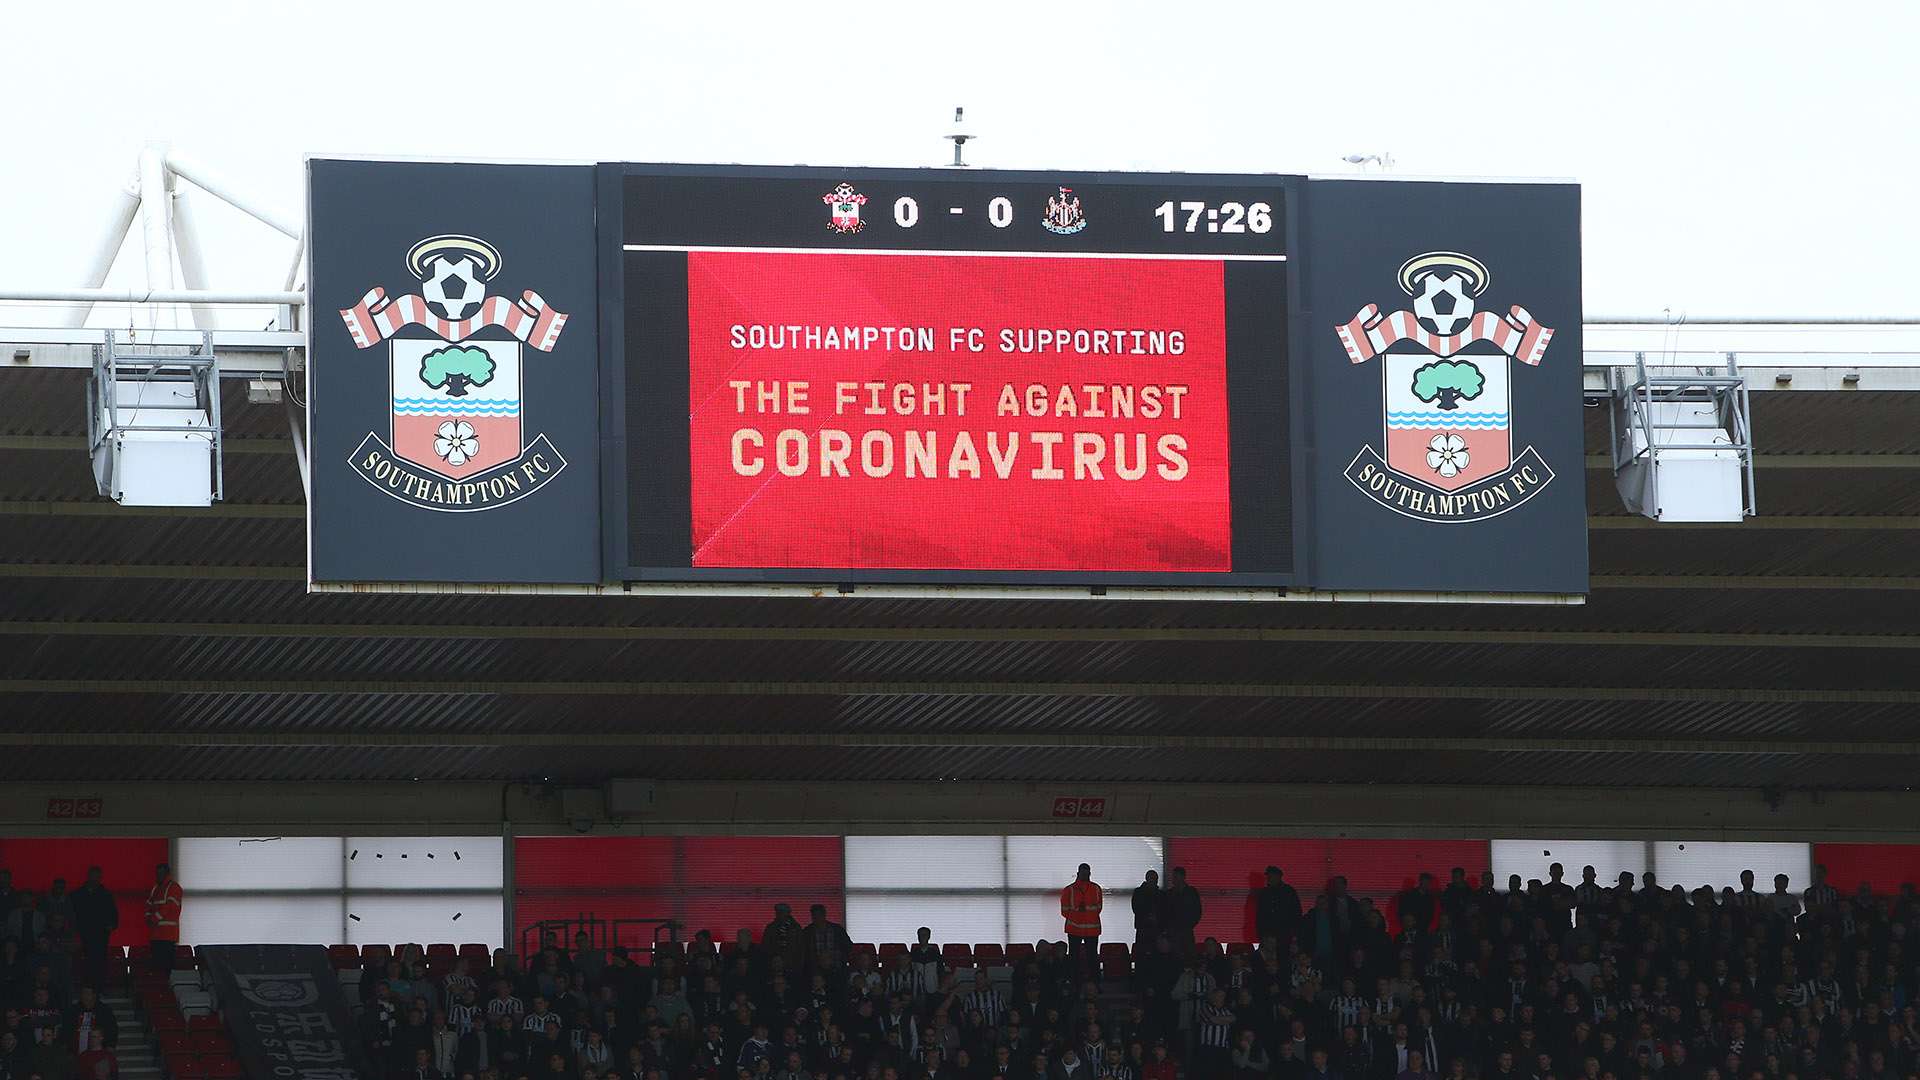 Premier League Coronavirus